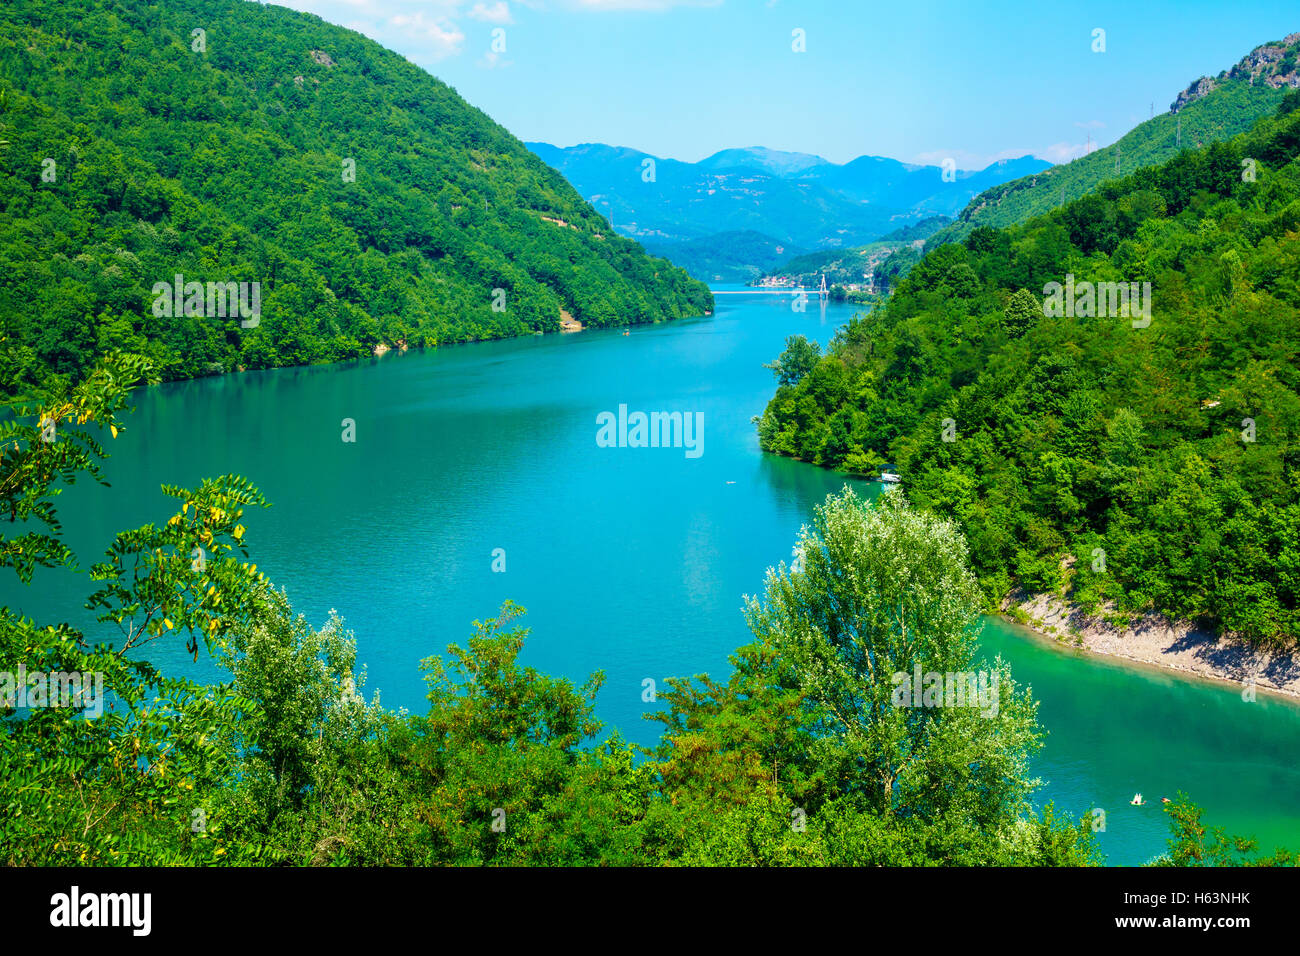 View of the Jablanicko Lake, on the Neretva River. Bosnia and Herzegovina Stock Photo